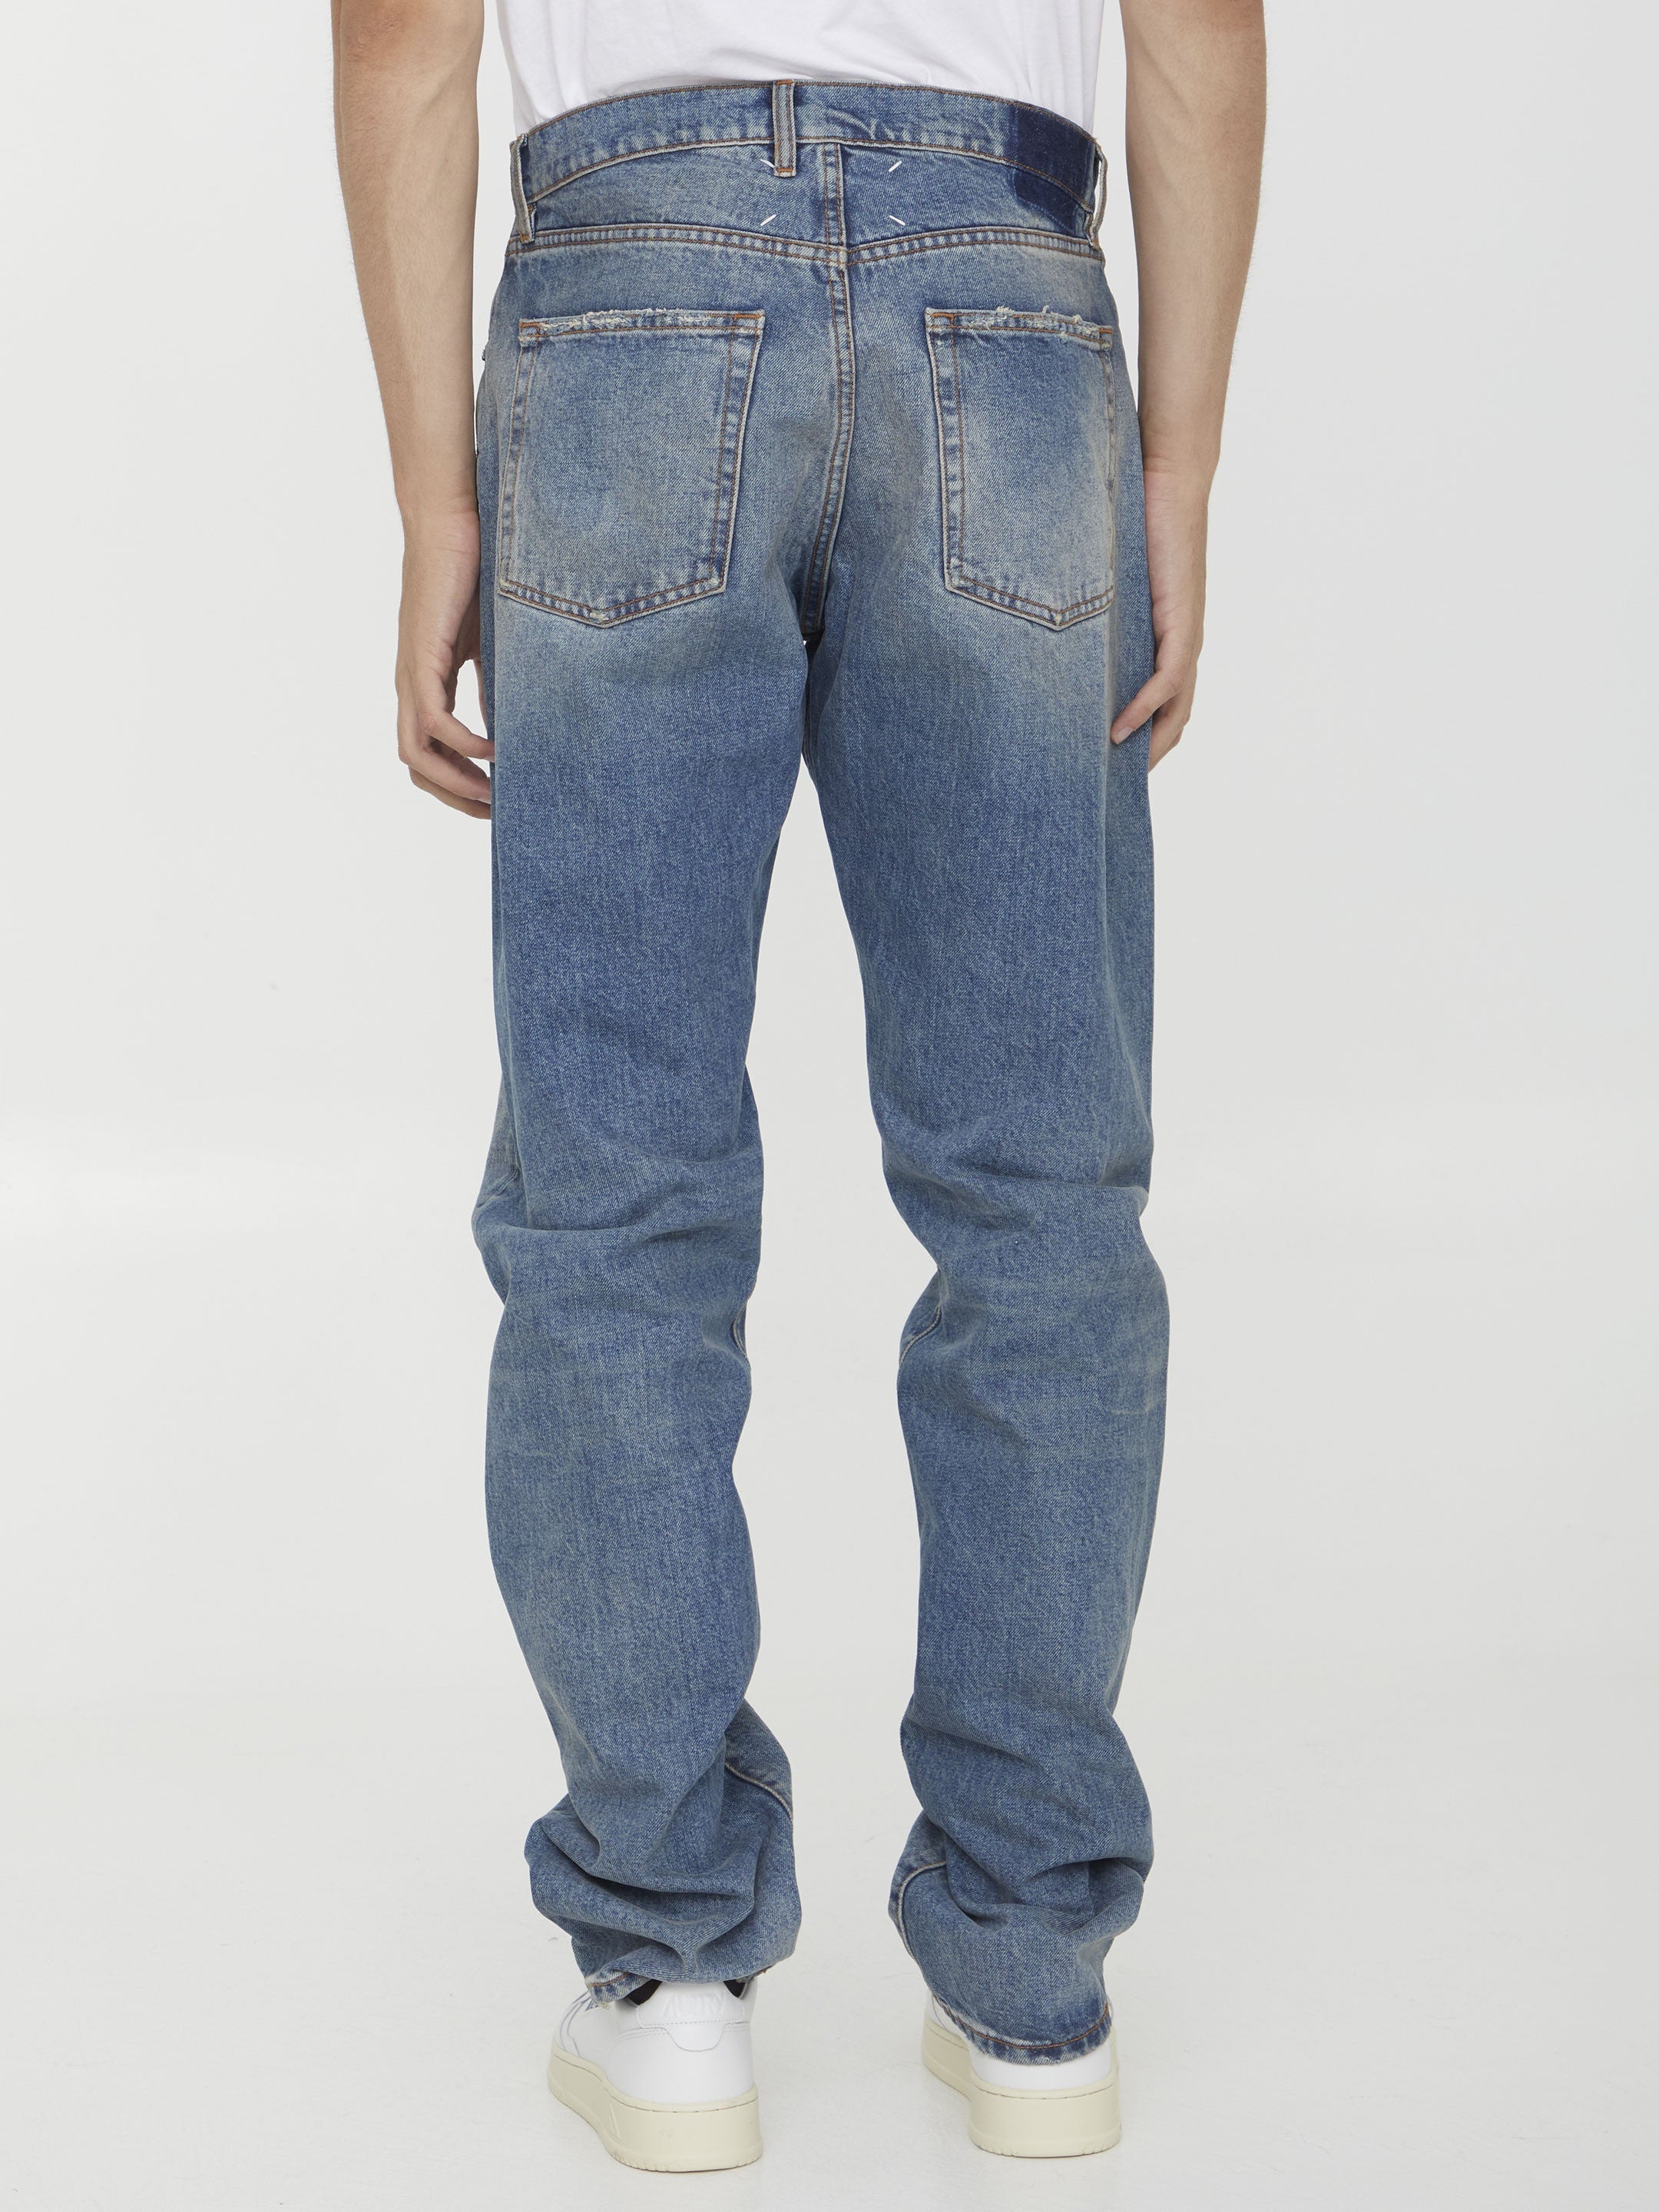 MAISON-MARGIELA-OUTLET-SALE-Distressed-denim-jeans-Jeans-ARCHIVE-COLLECTION-4.jpg